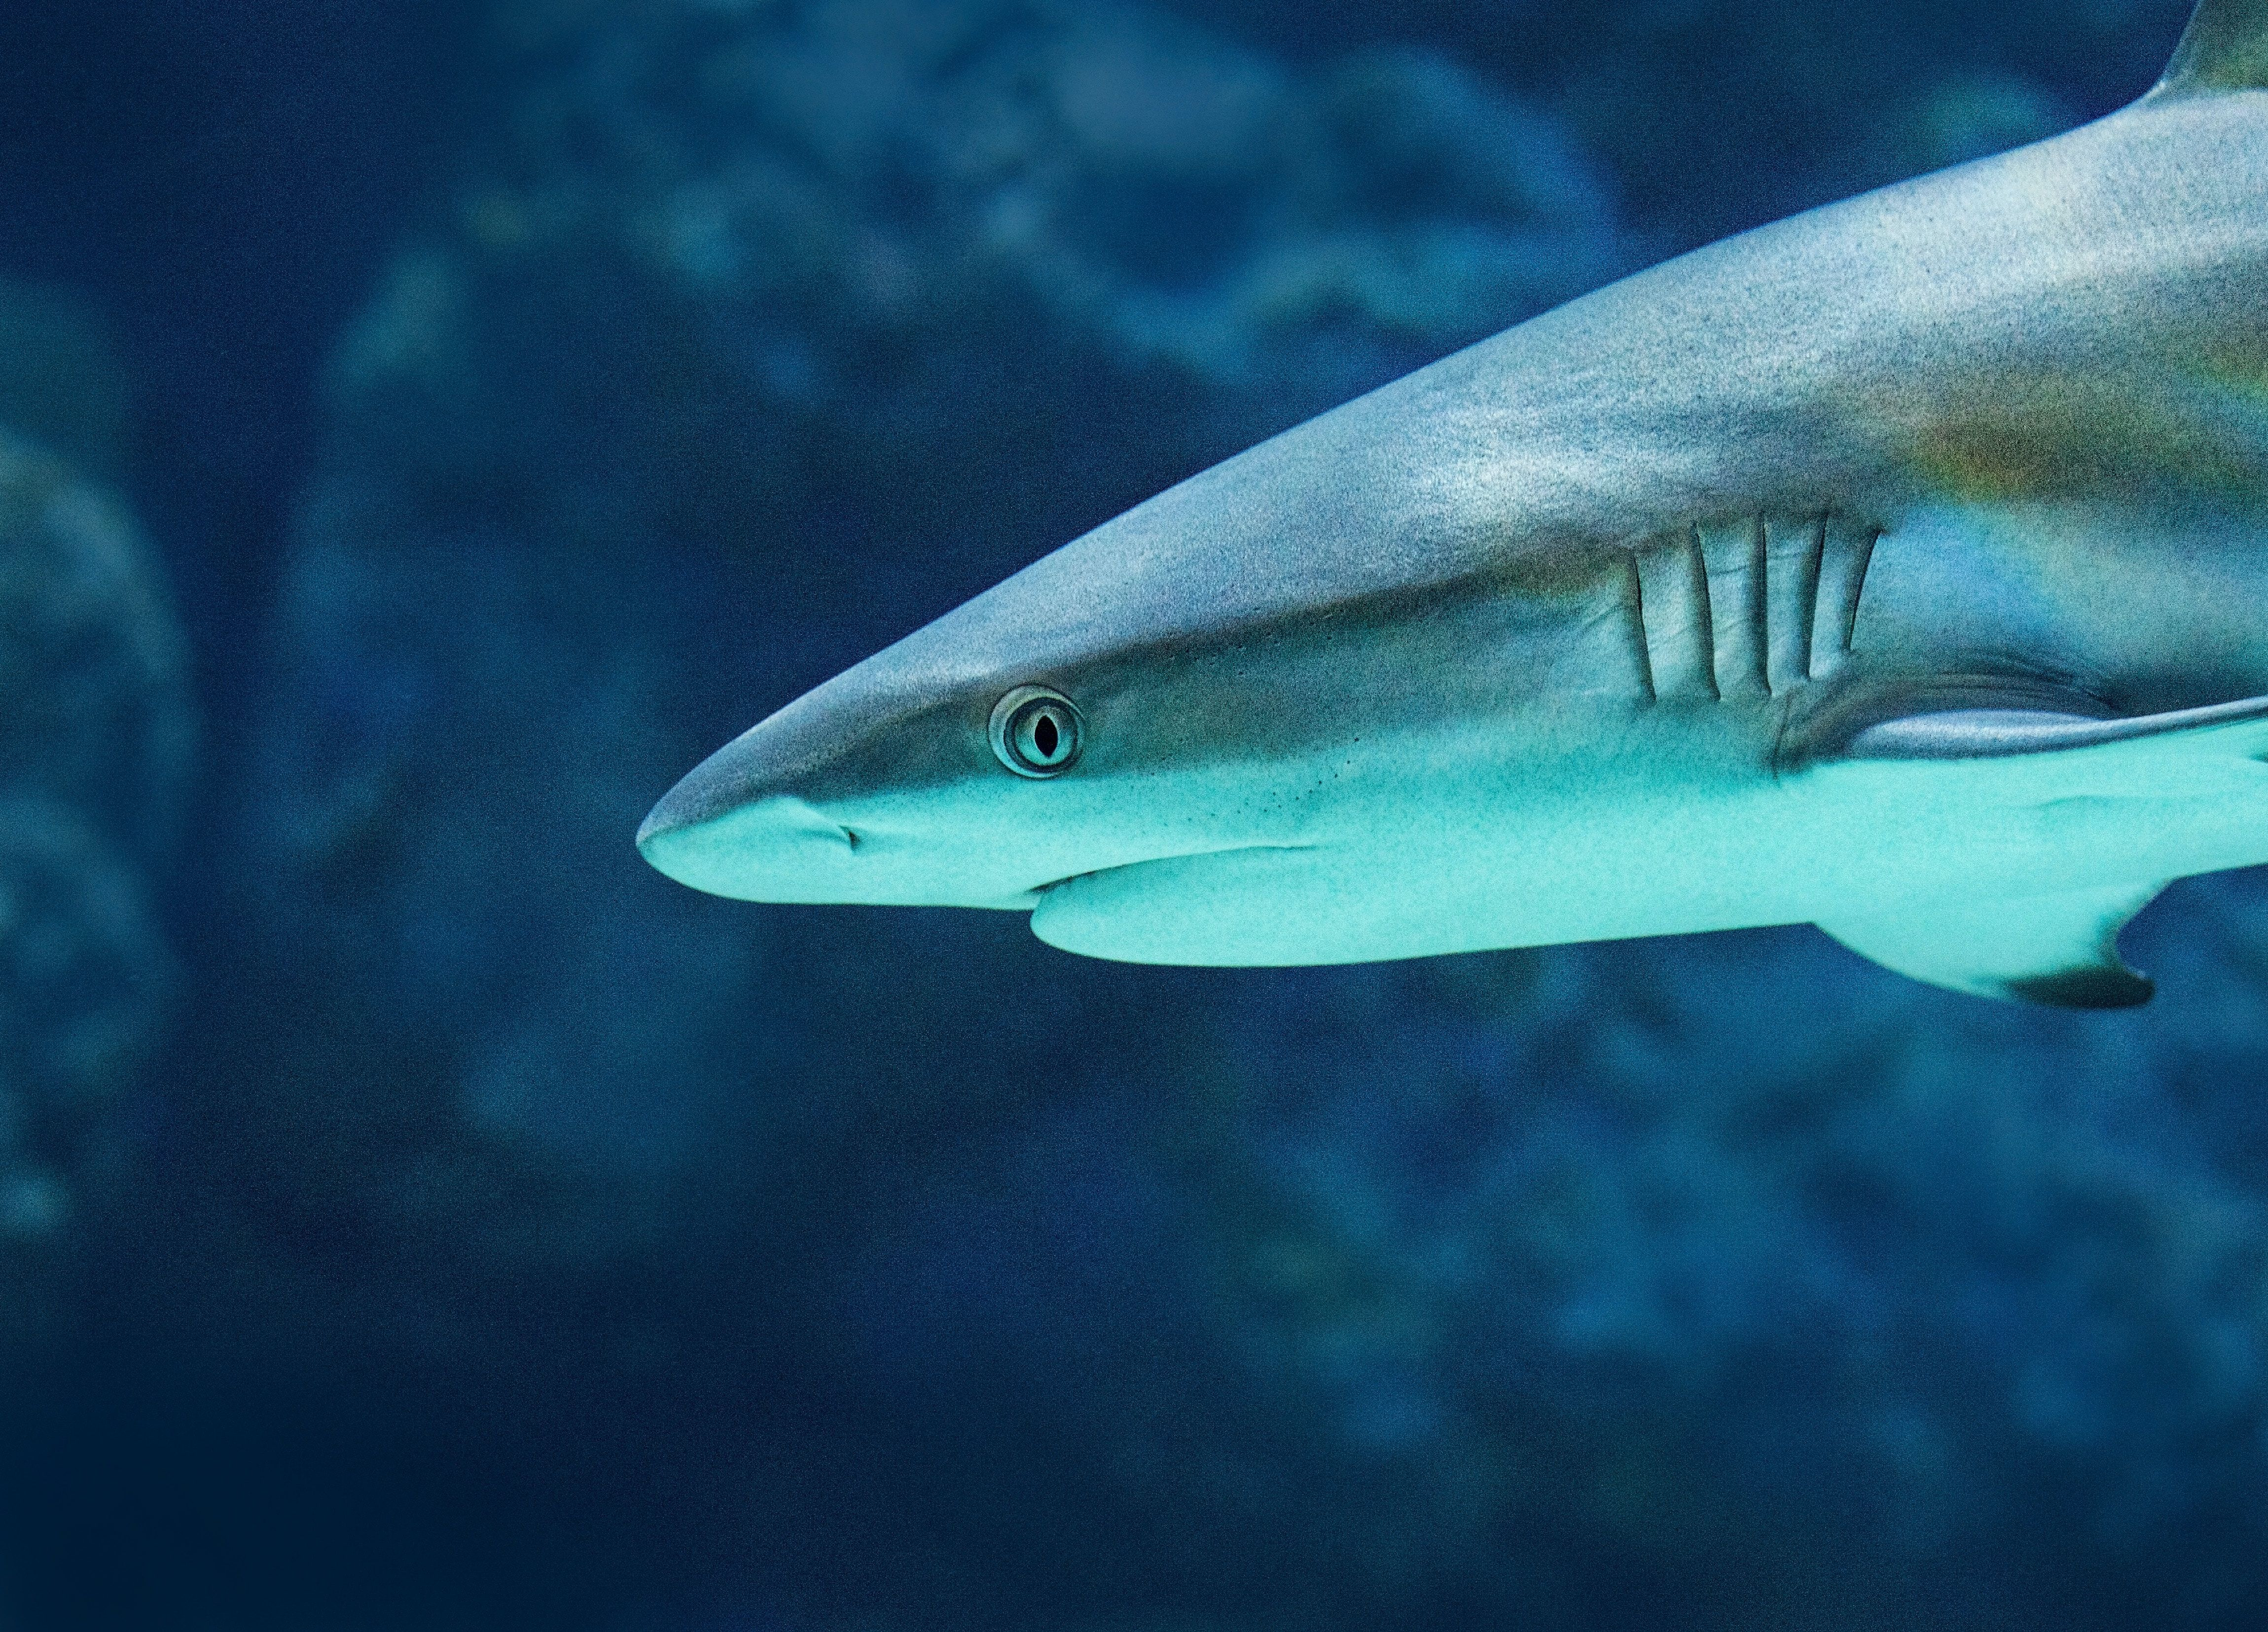 "Ходячая акула" родила детеныша без помощи самца